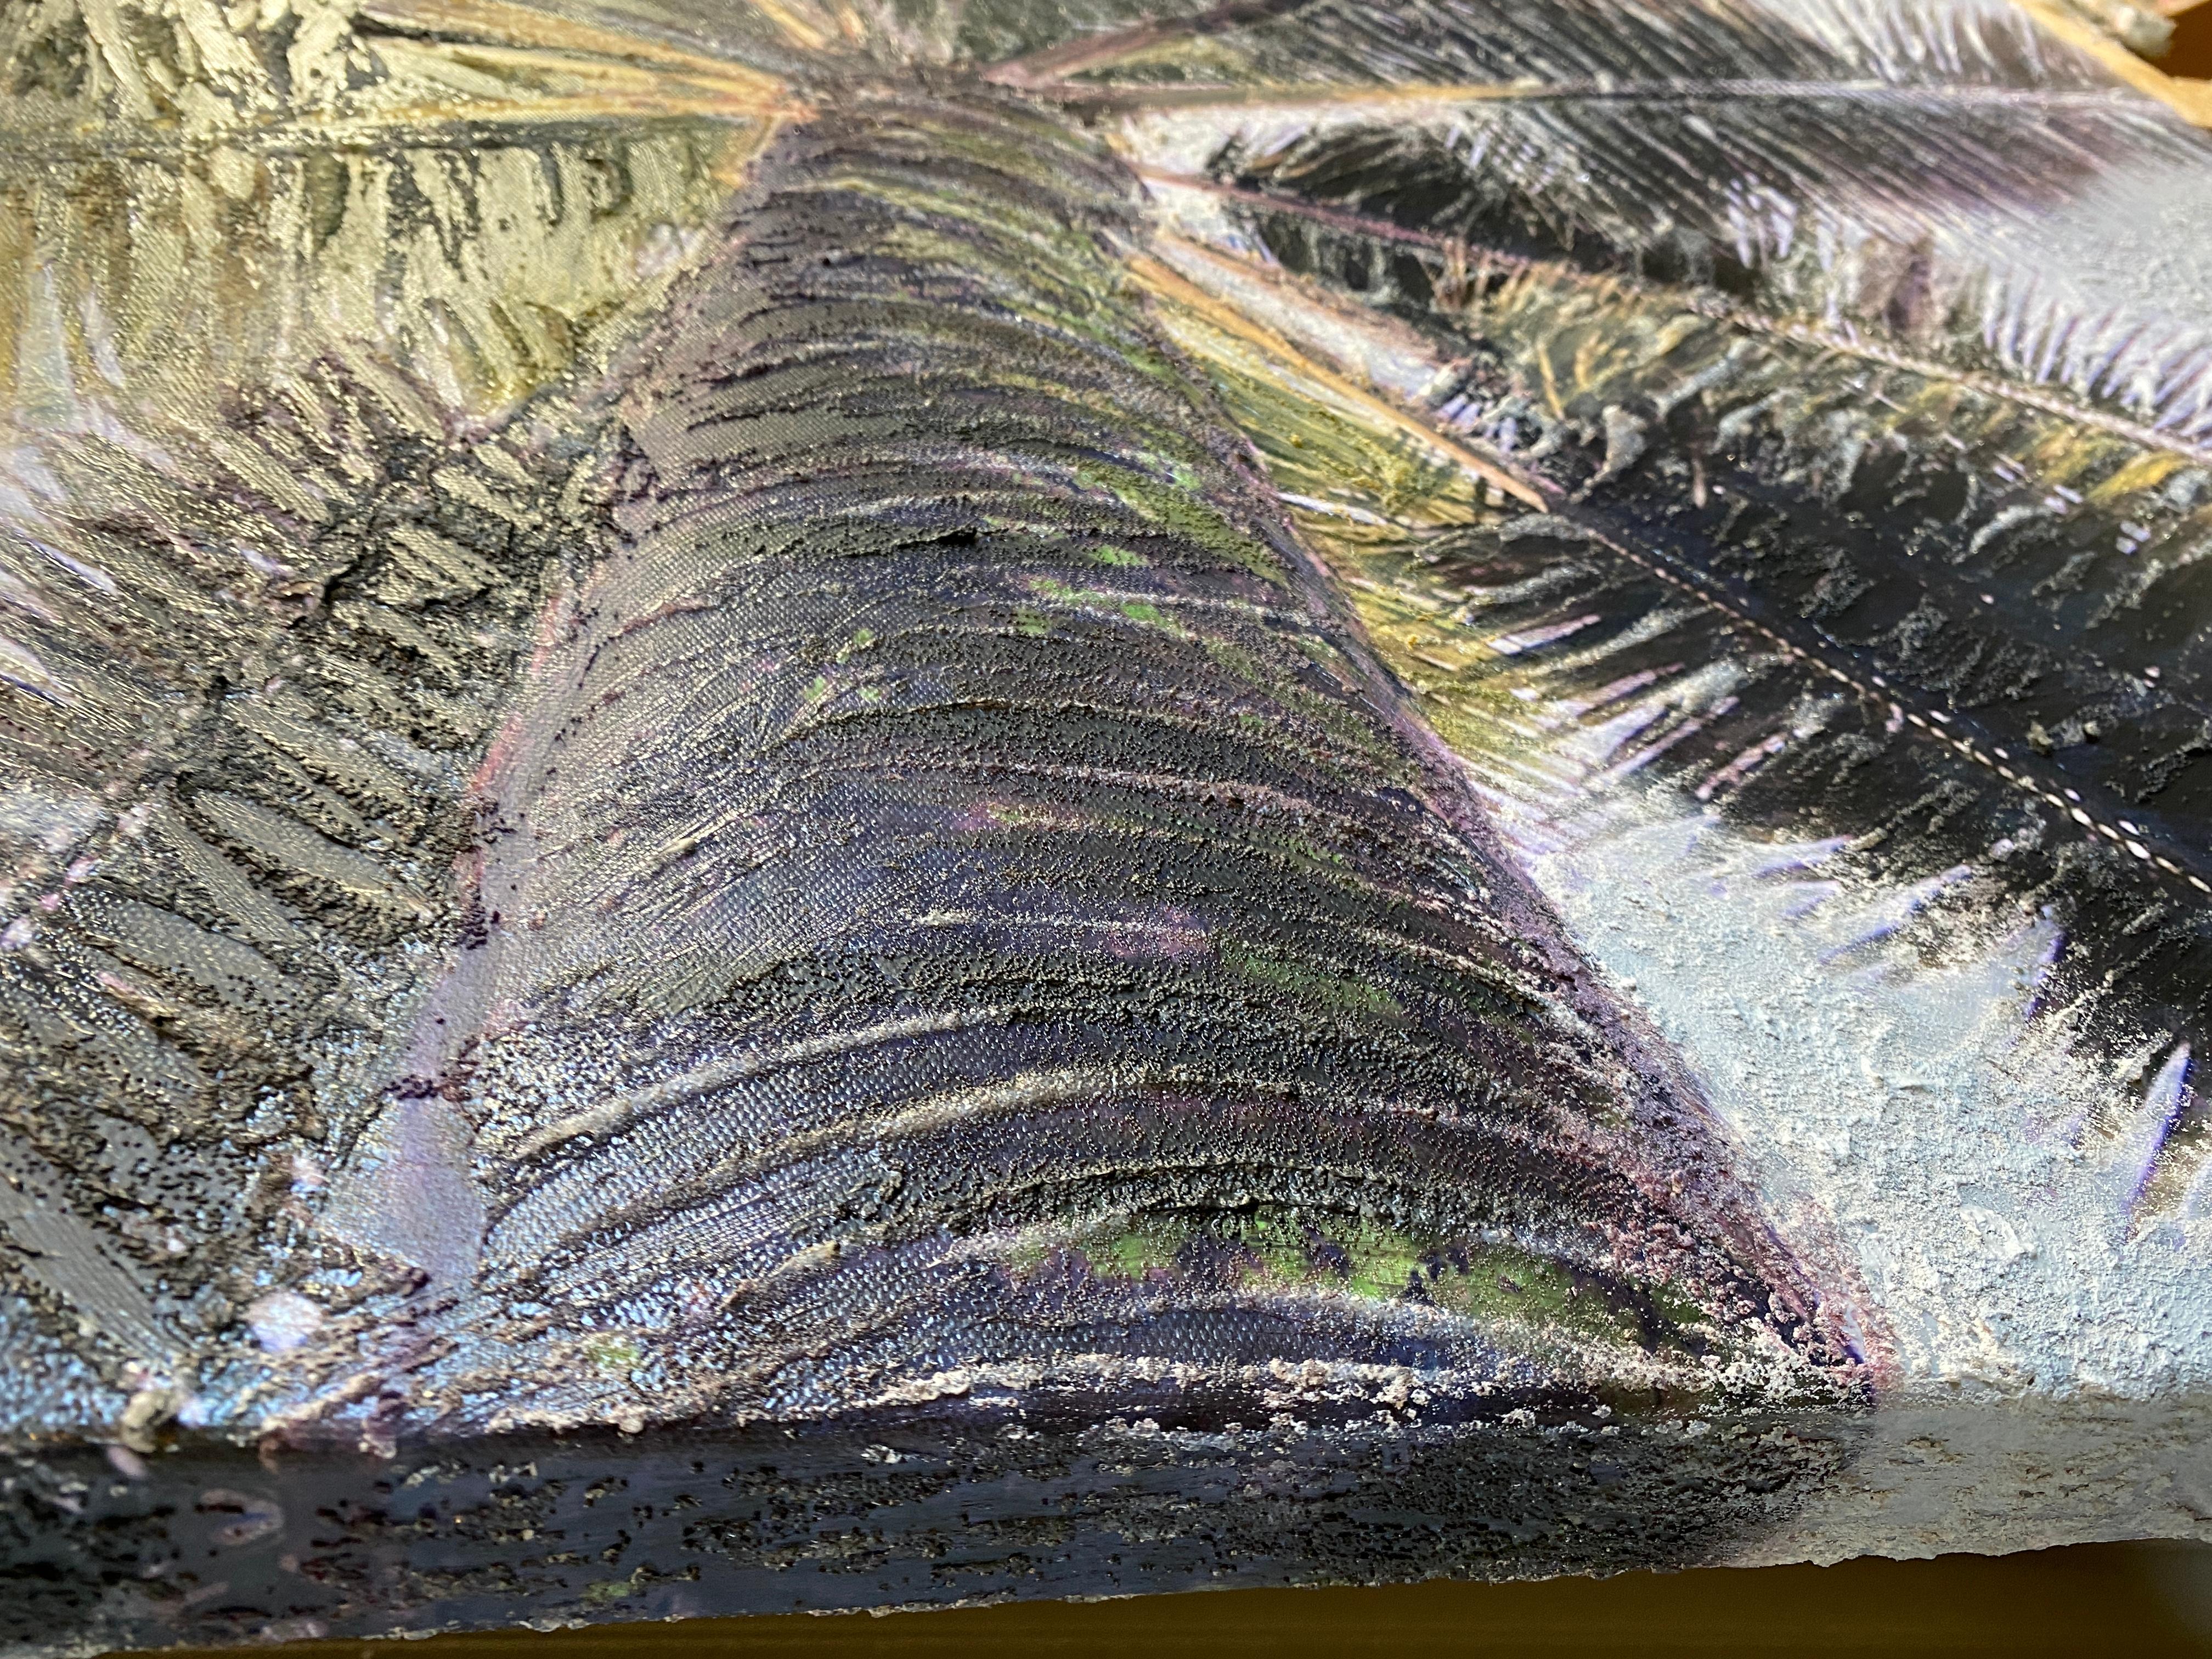 Coastal Palms Mixed Media Painting on Canvas 60h x 40